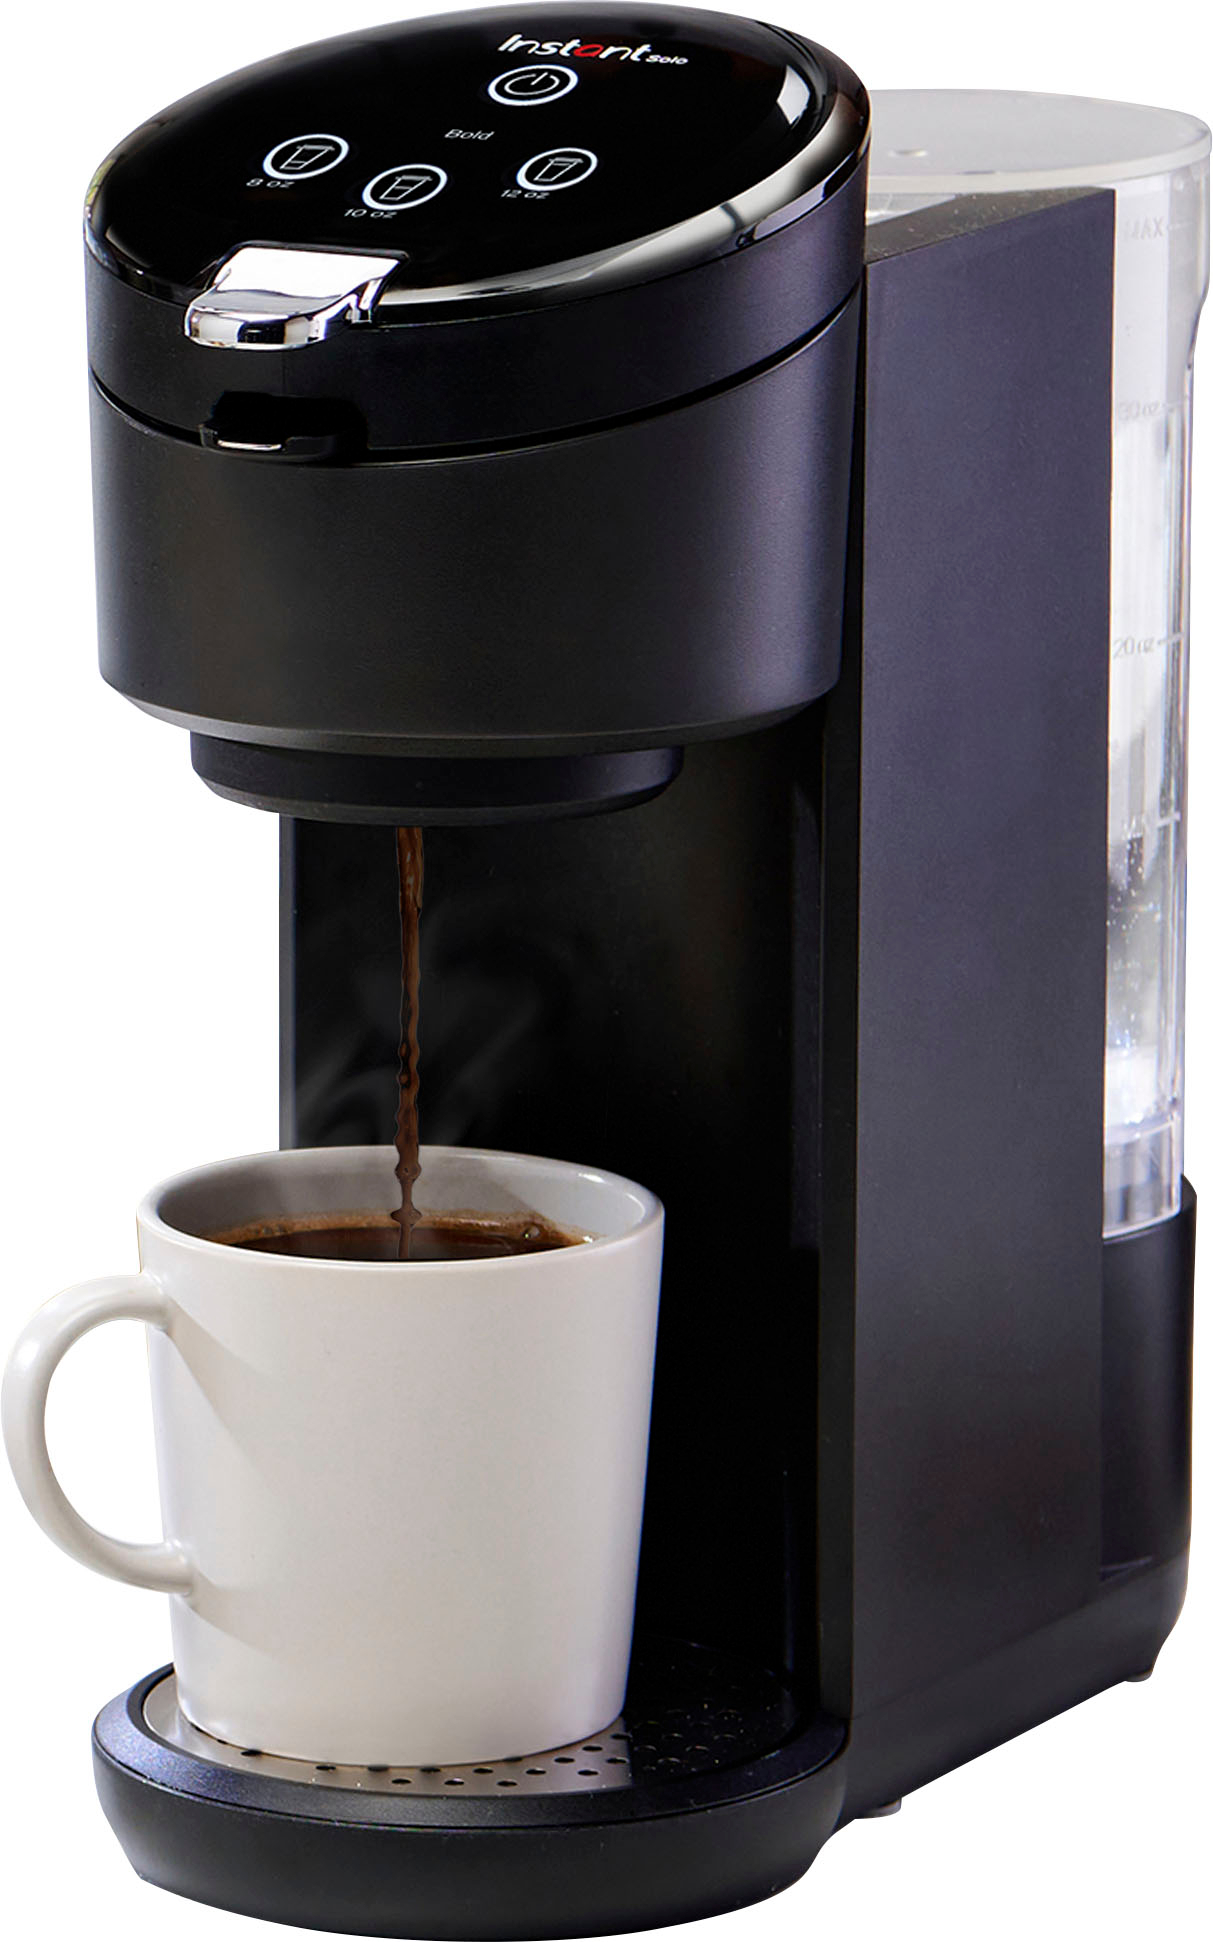 Keurig K-Slim   ICED Single Serve Coffee Maker, Brews to 12oz. Cups, Gray